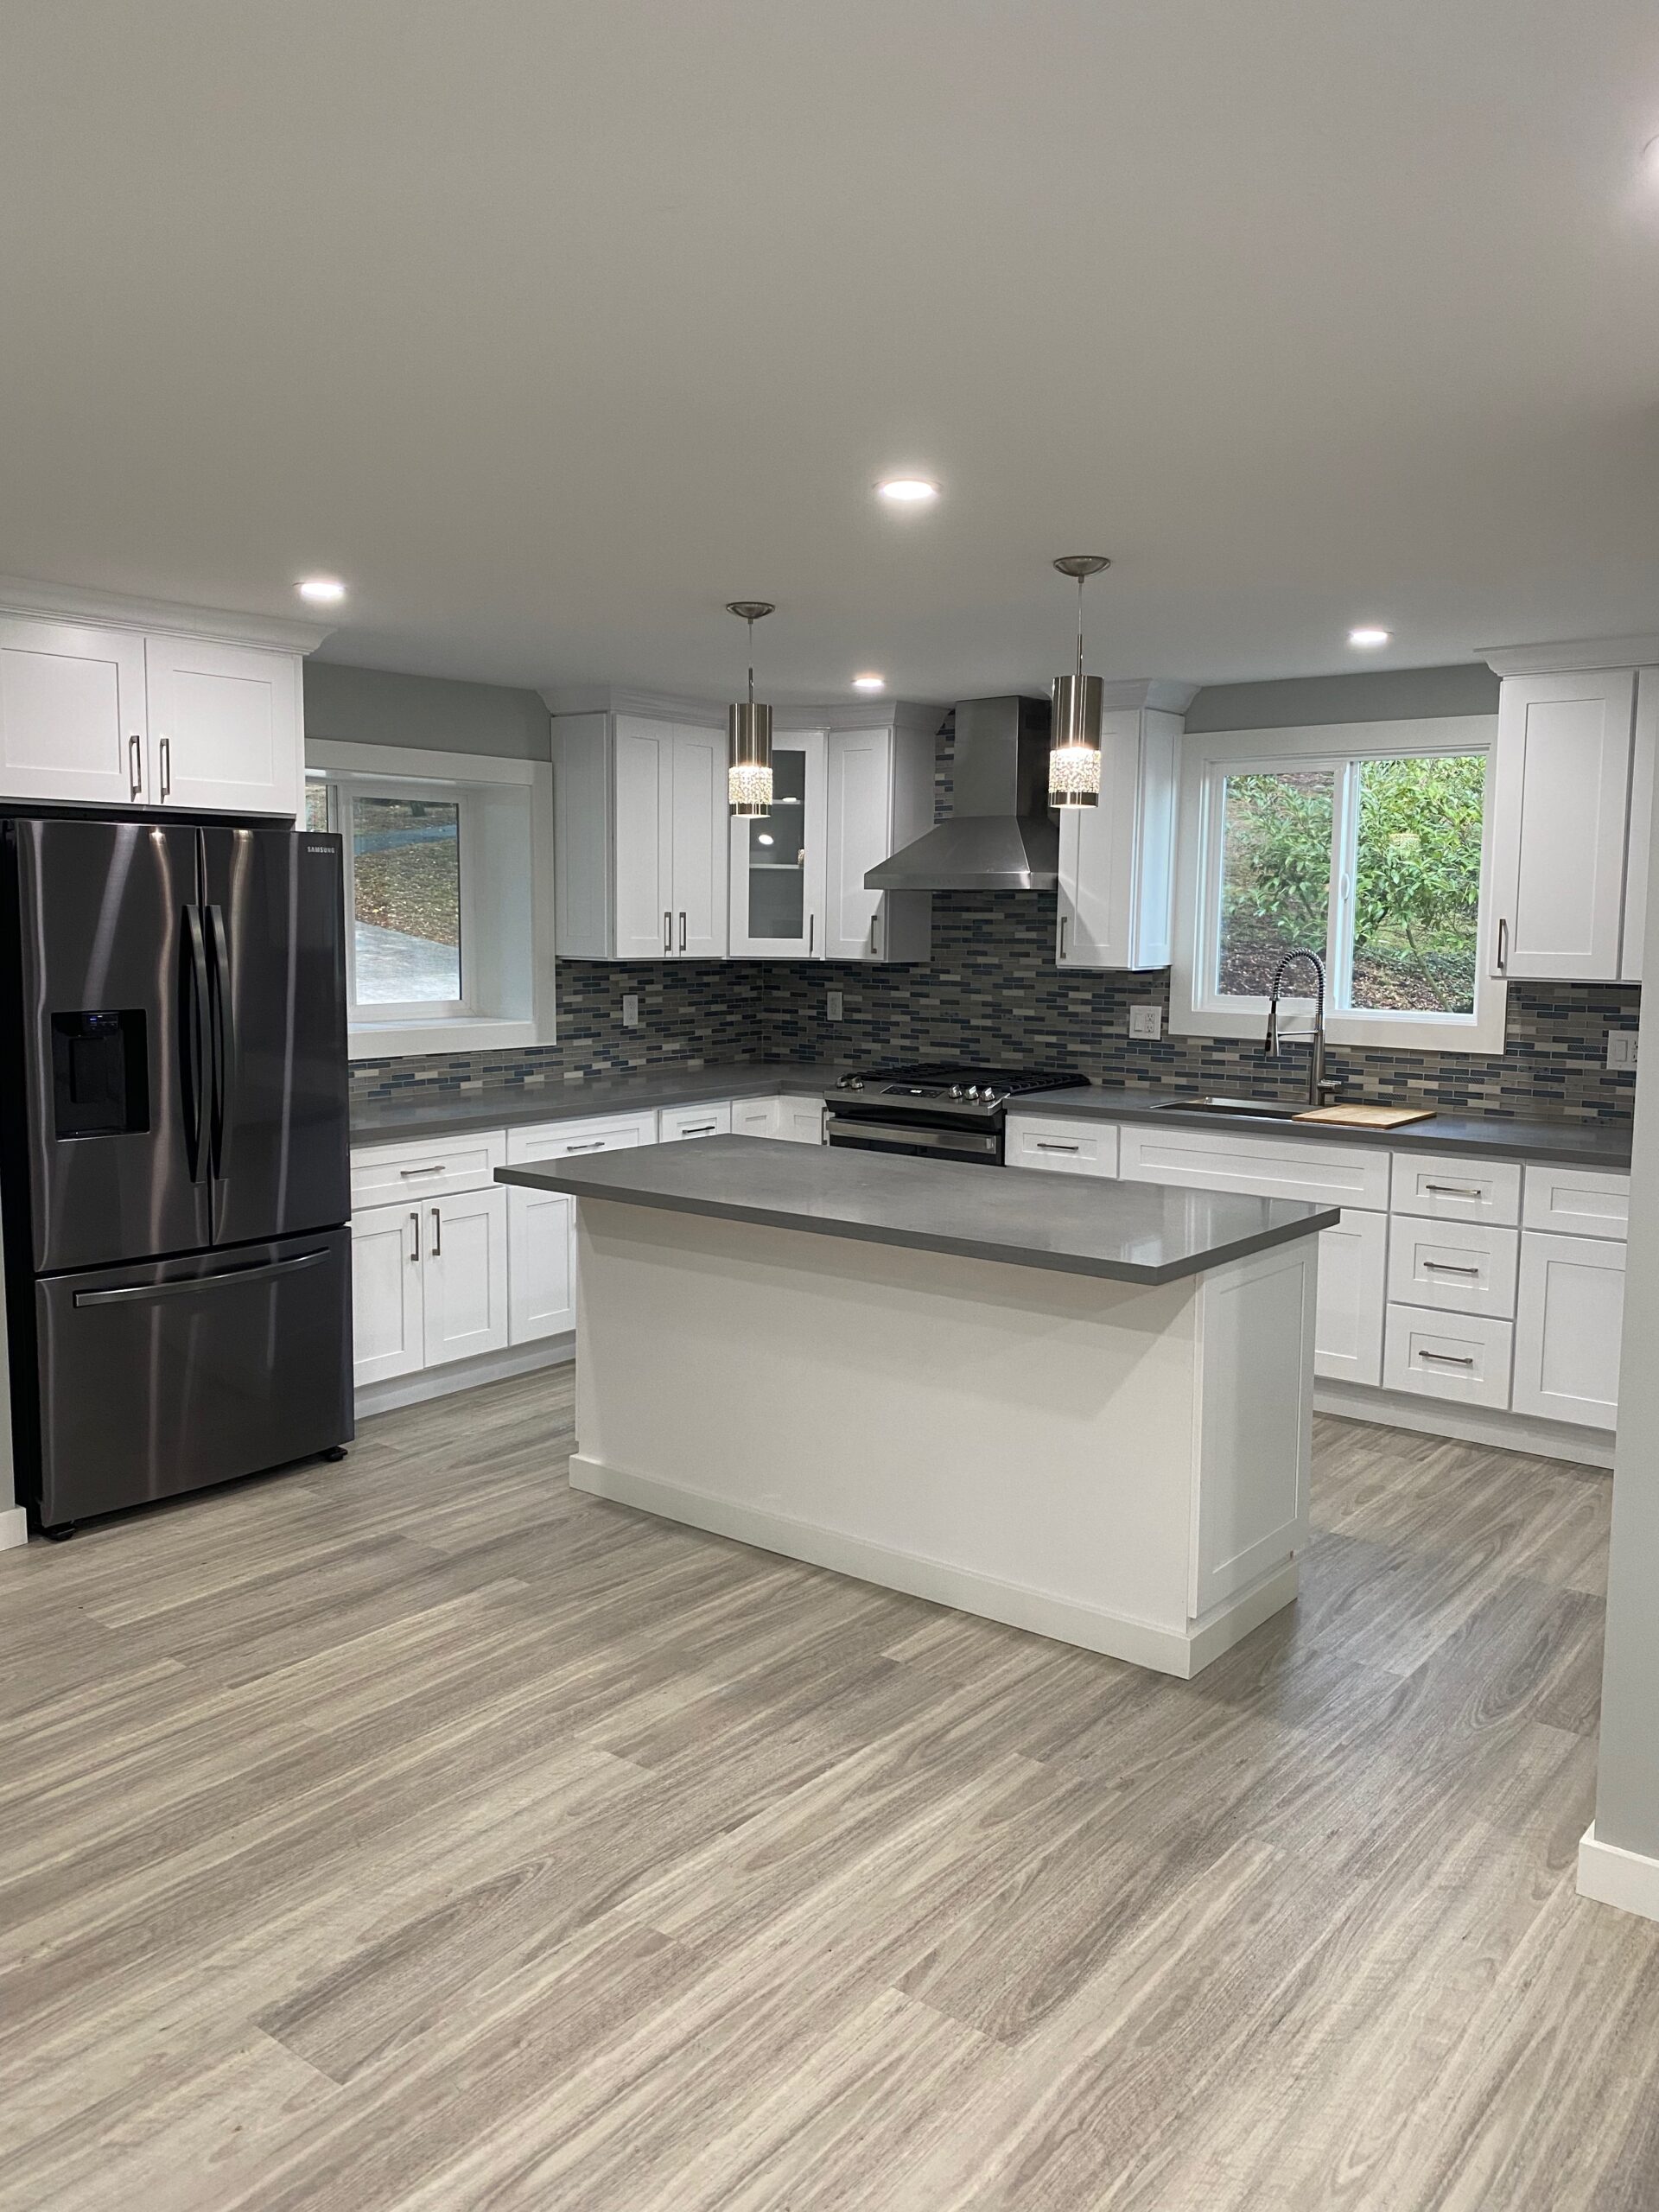 Accessory Dwelling Unit with modern kitchen, backsplash, and kitchen island in San Jose, CA